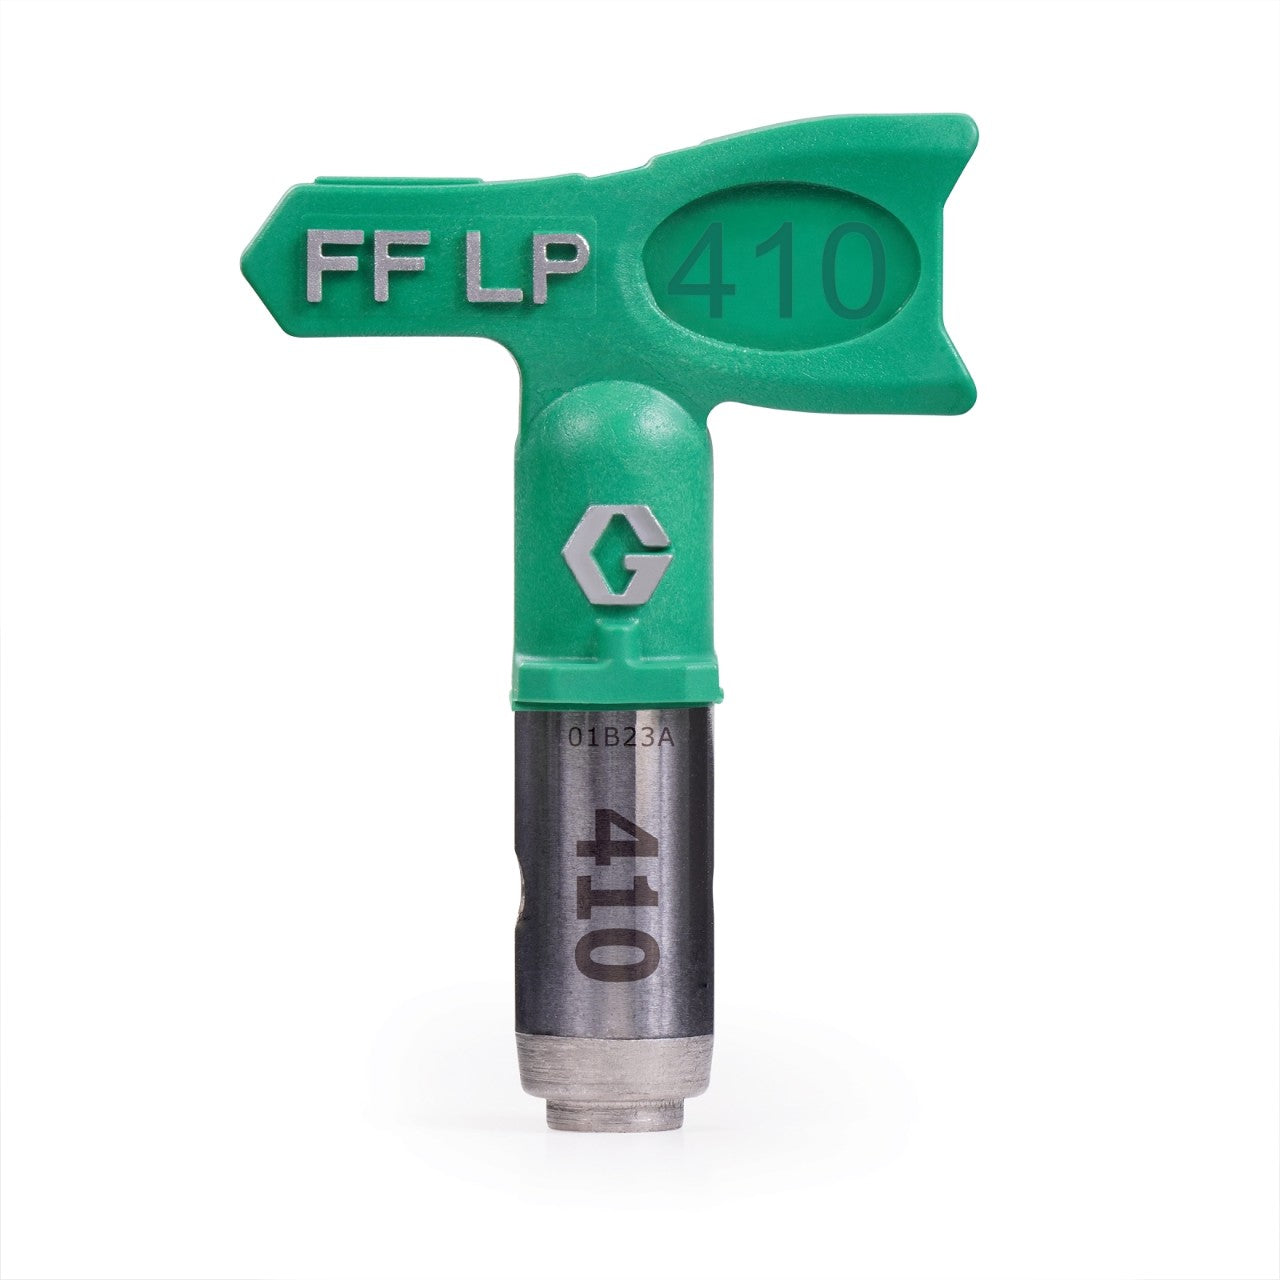 Graco FFLP-410 Tip